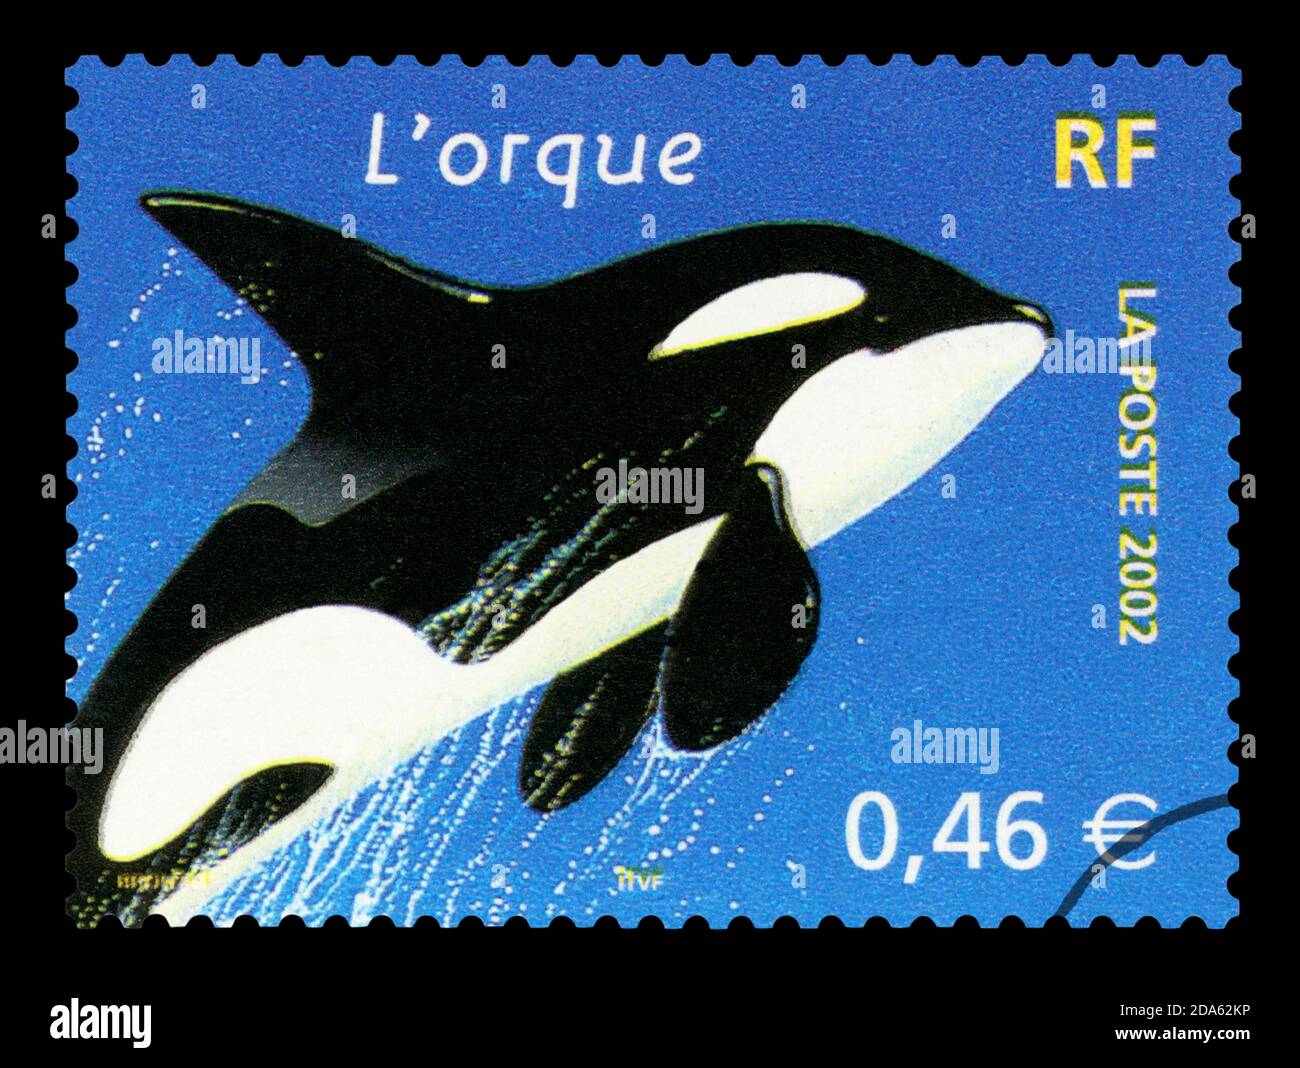 FRANCE - circa 2002 : timbre imprimé en France montre un orque , circa 2002 Banque D'Images